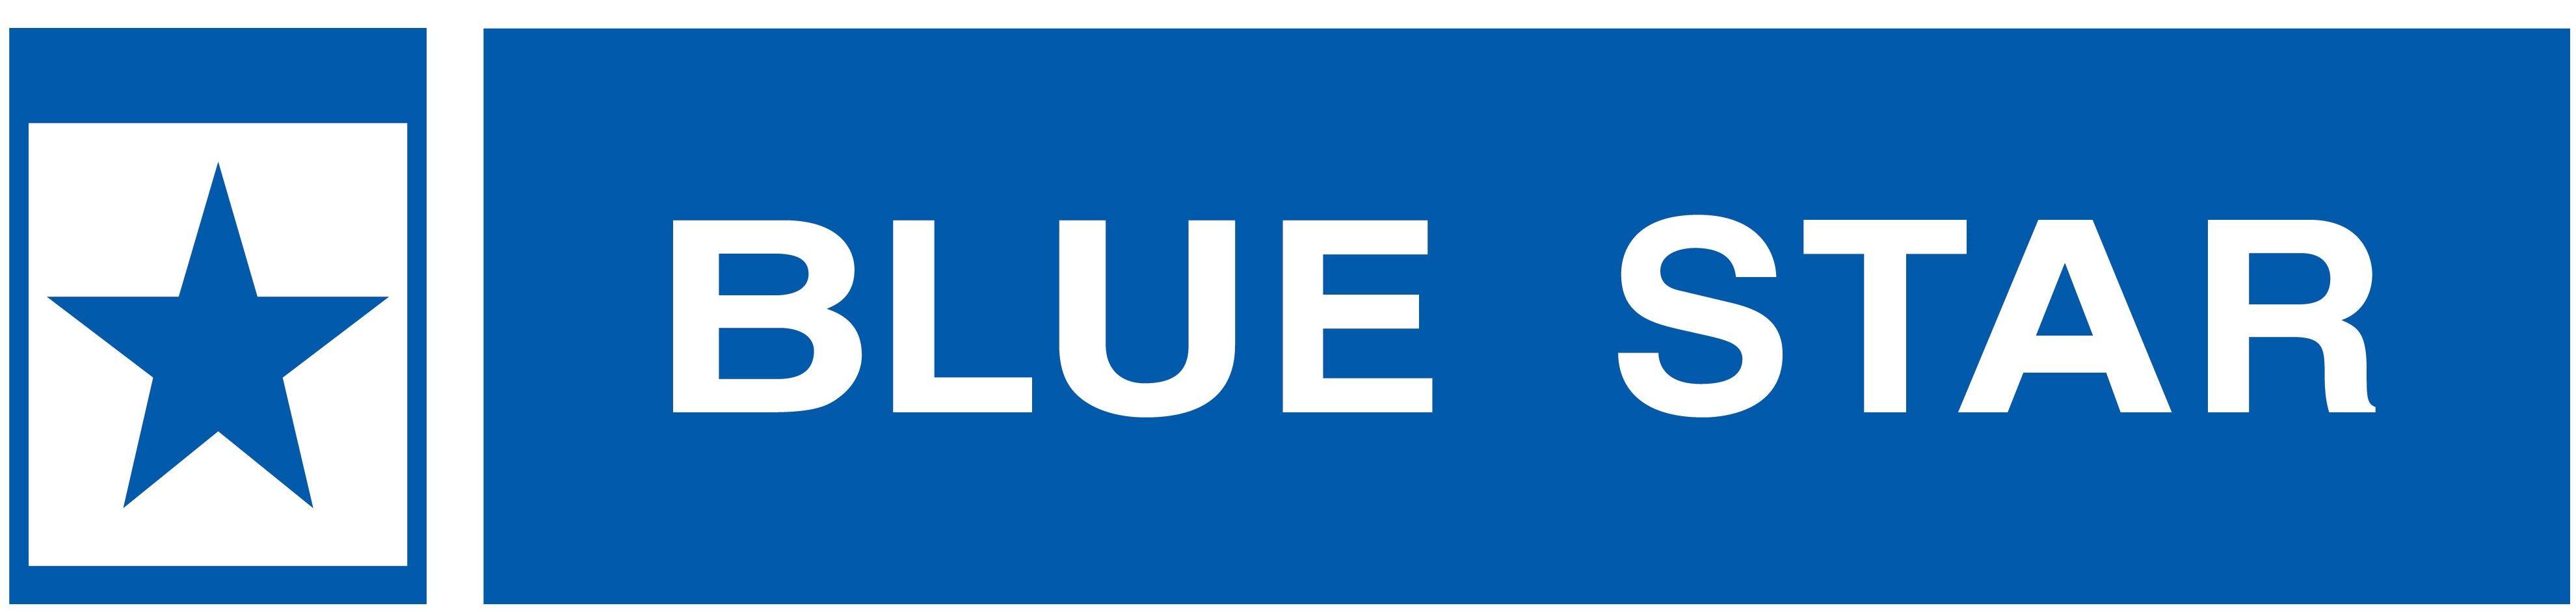 Blue Star Logo - Blue star company Logos